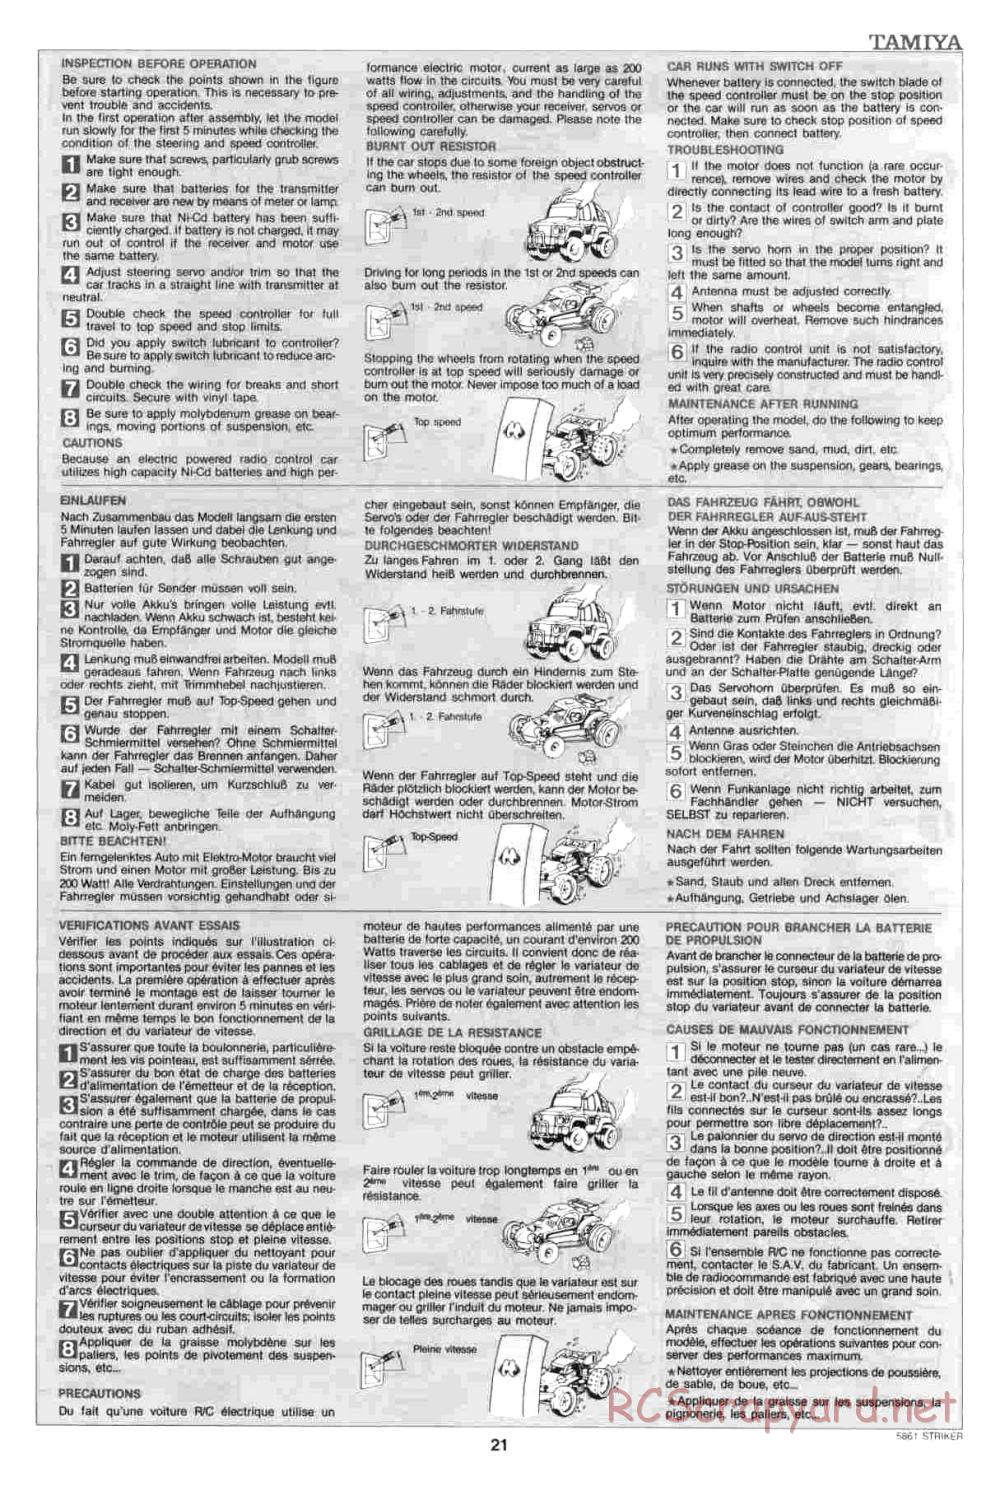 Tamiya - Striker - 58061 - Manual - Page 21